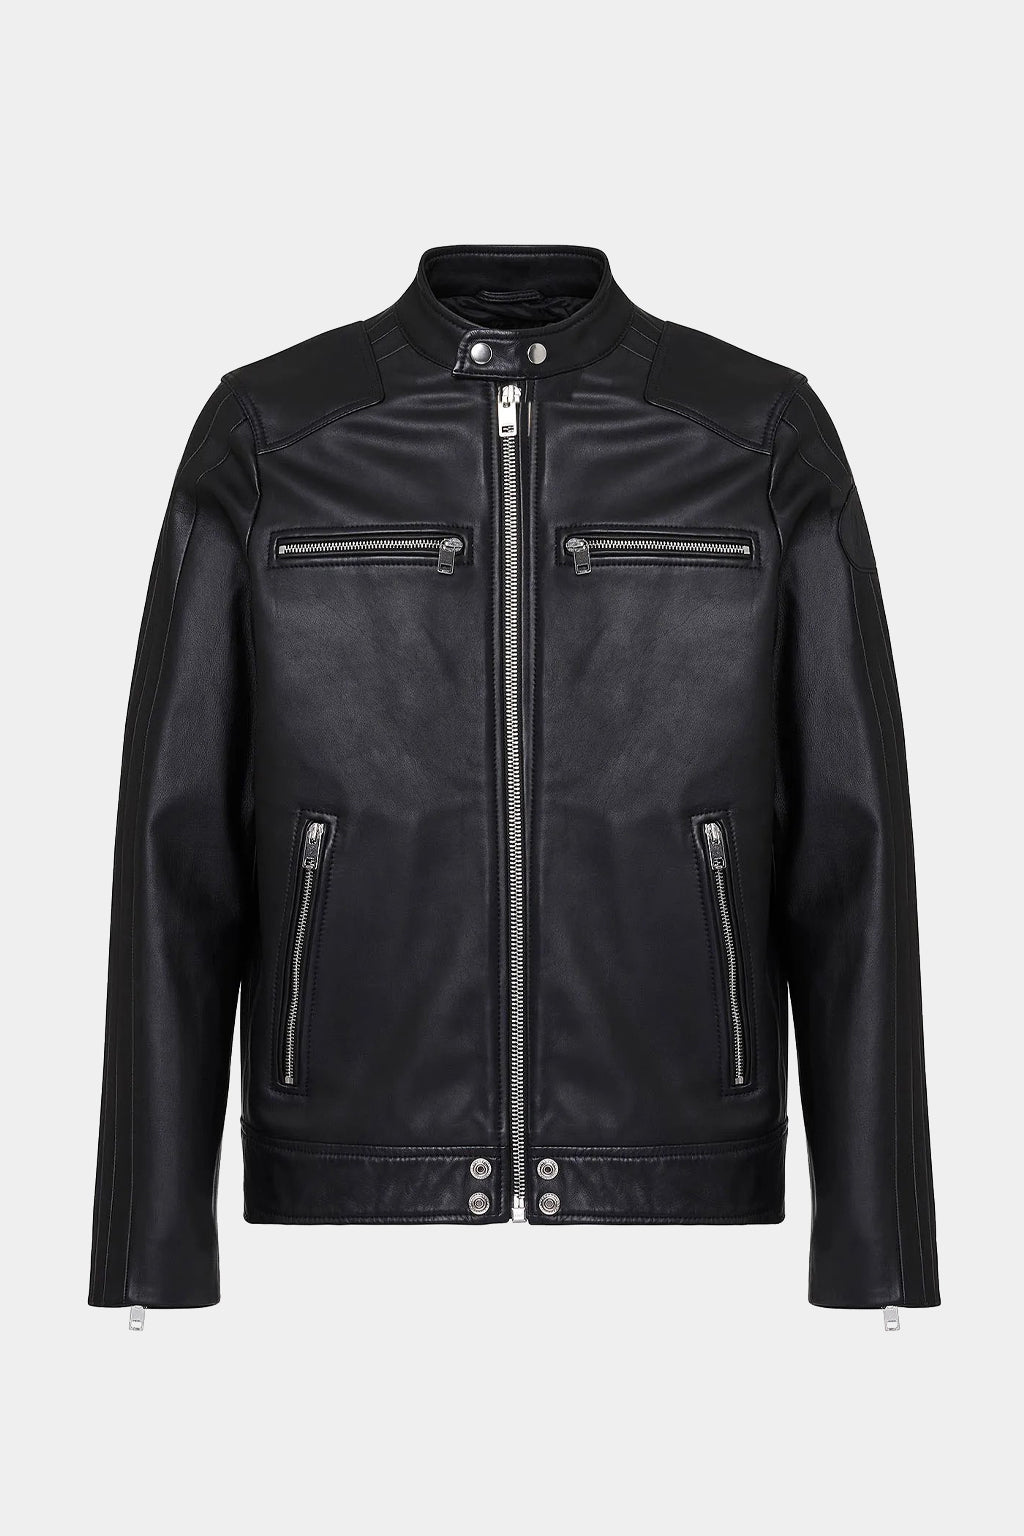 Diesel - Men's Leather Jacket